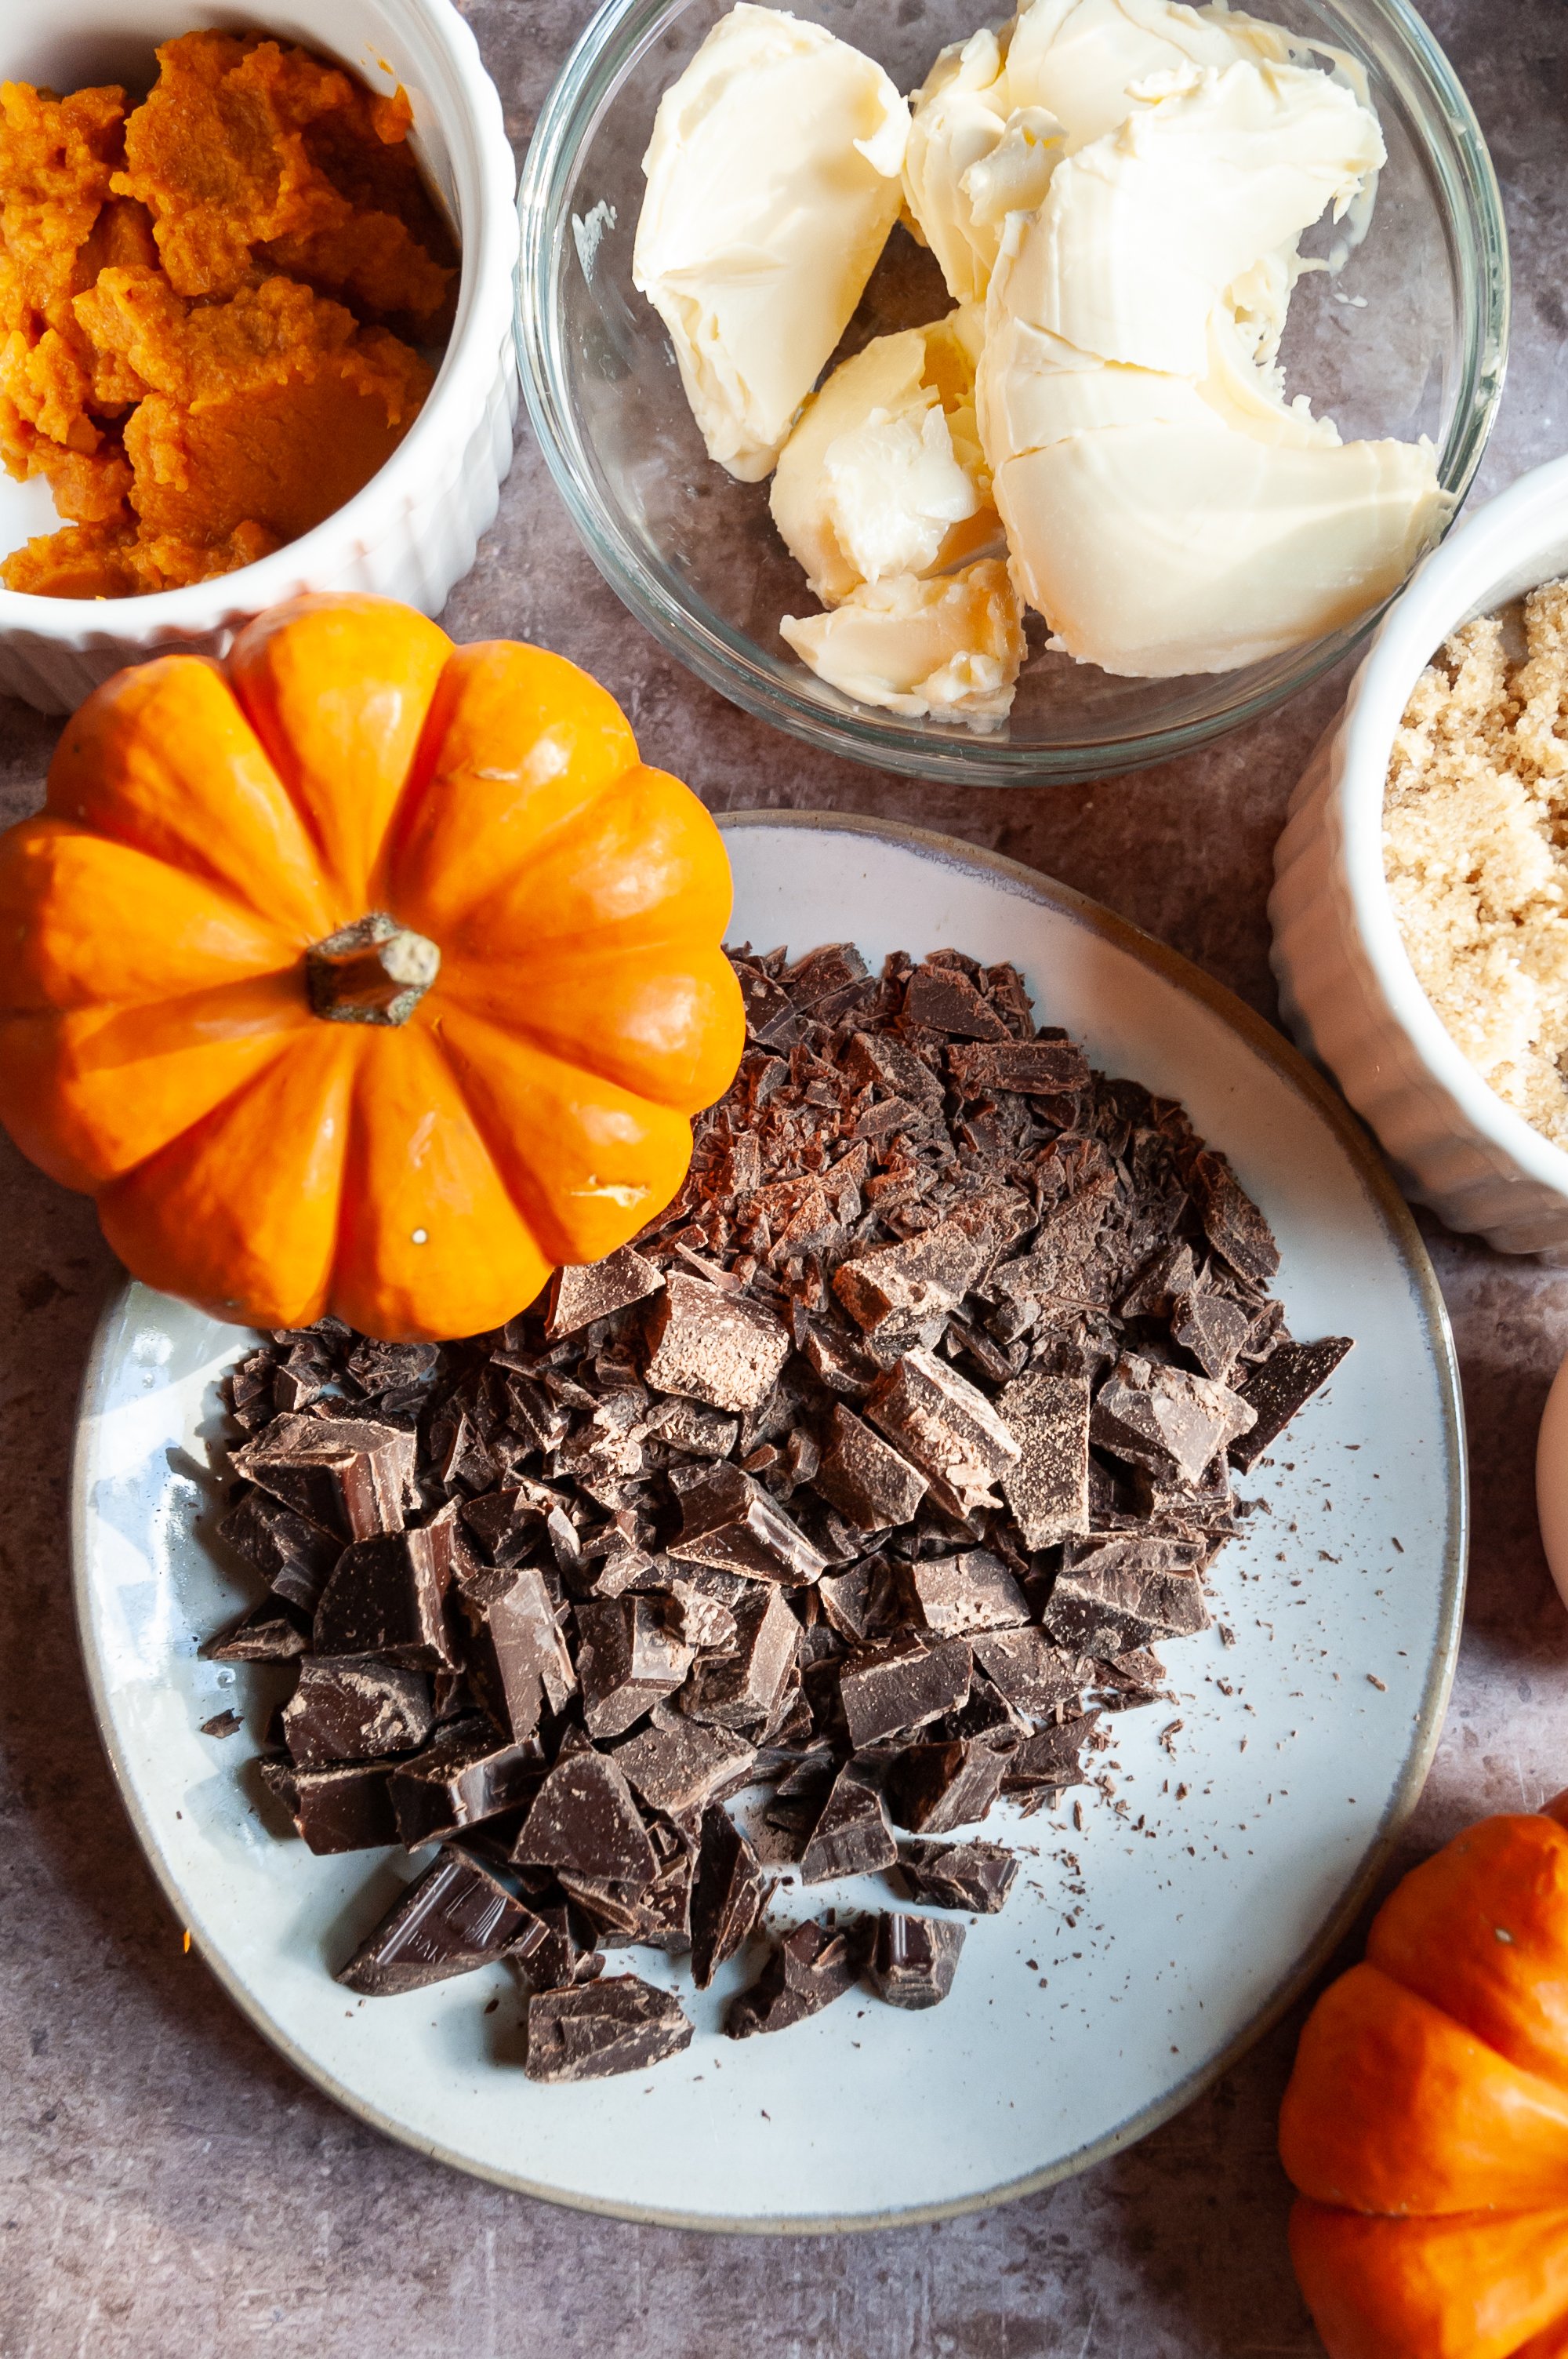 Ingredients for Gluten-Free Pumpkin Chocolate Chip Cookies